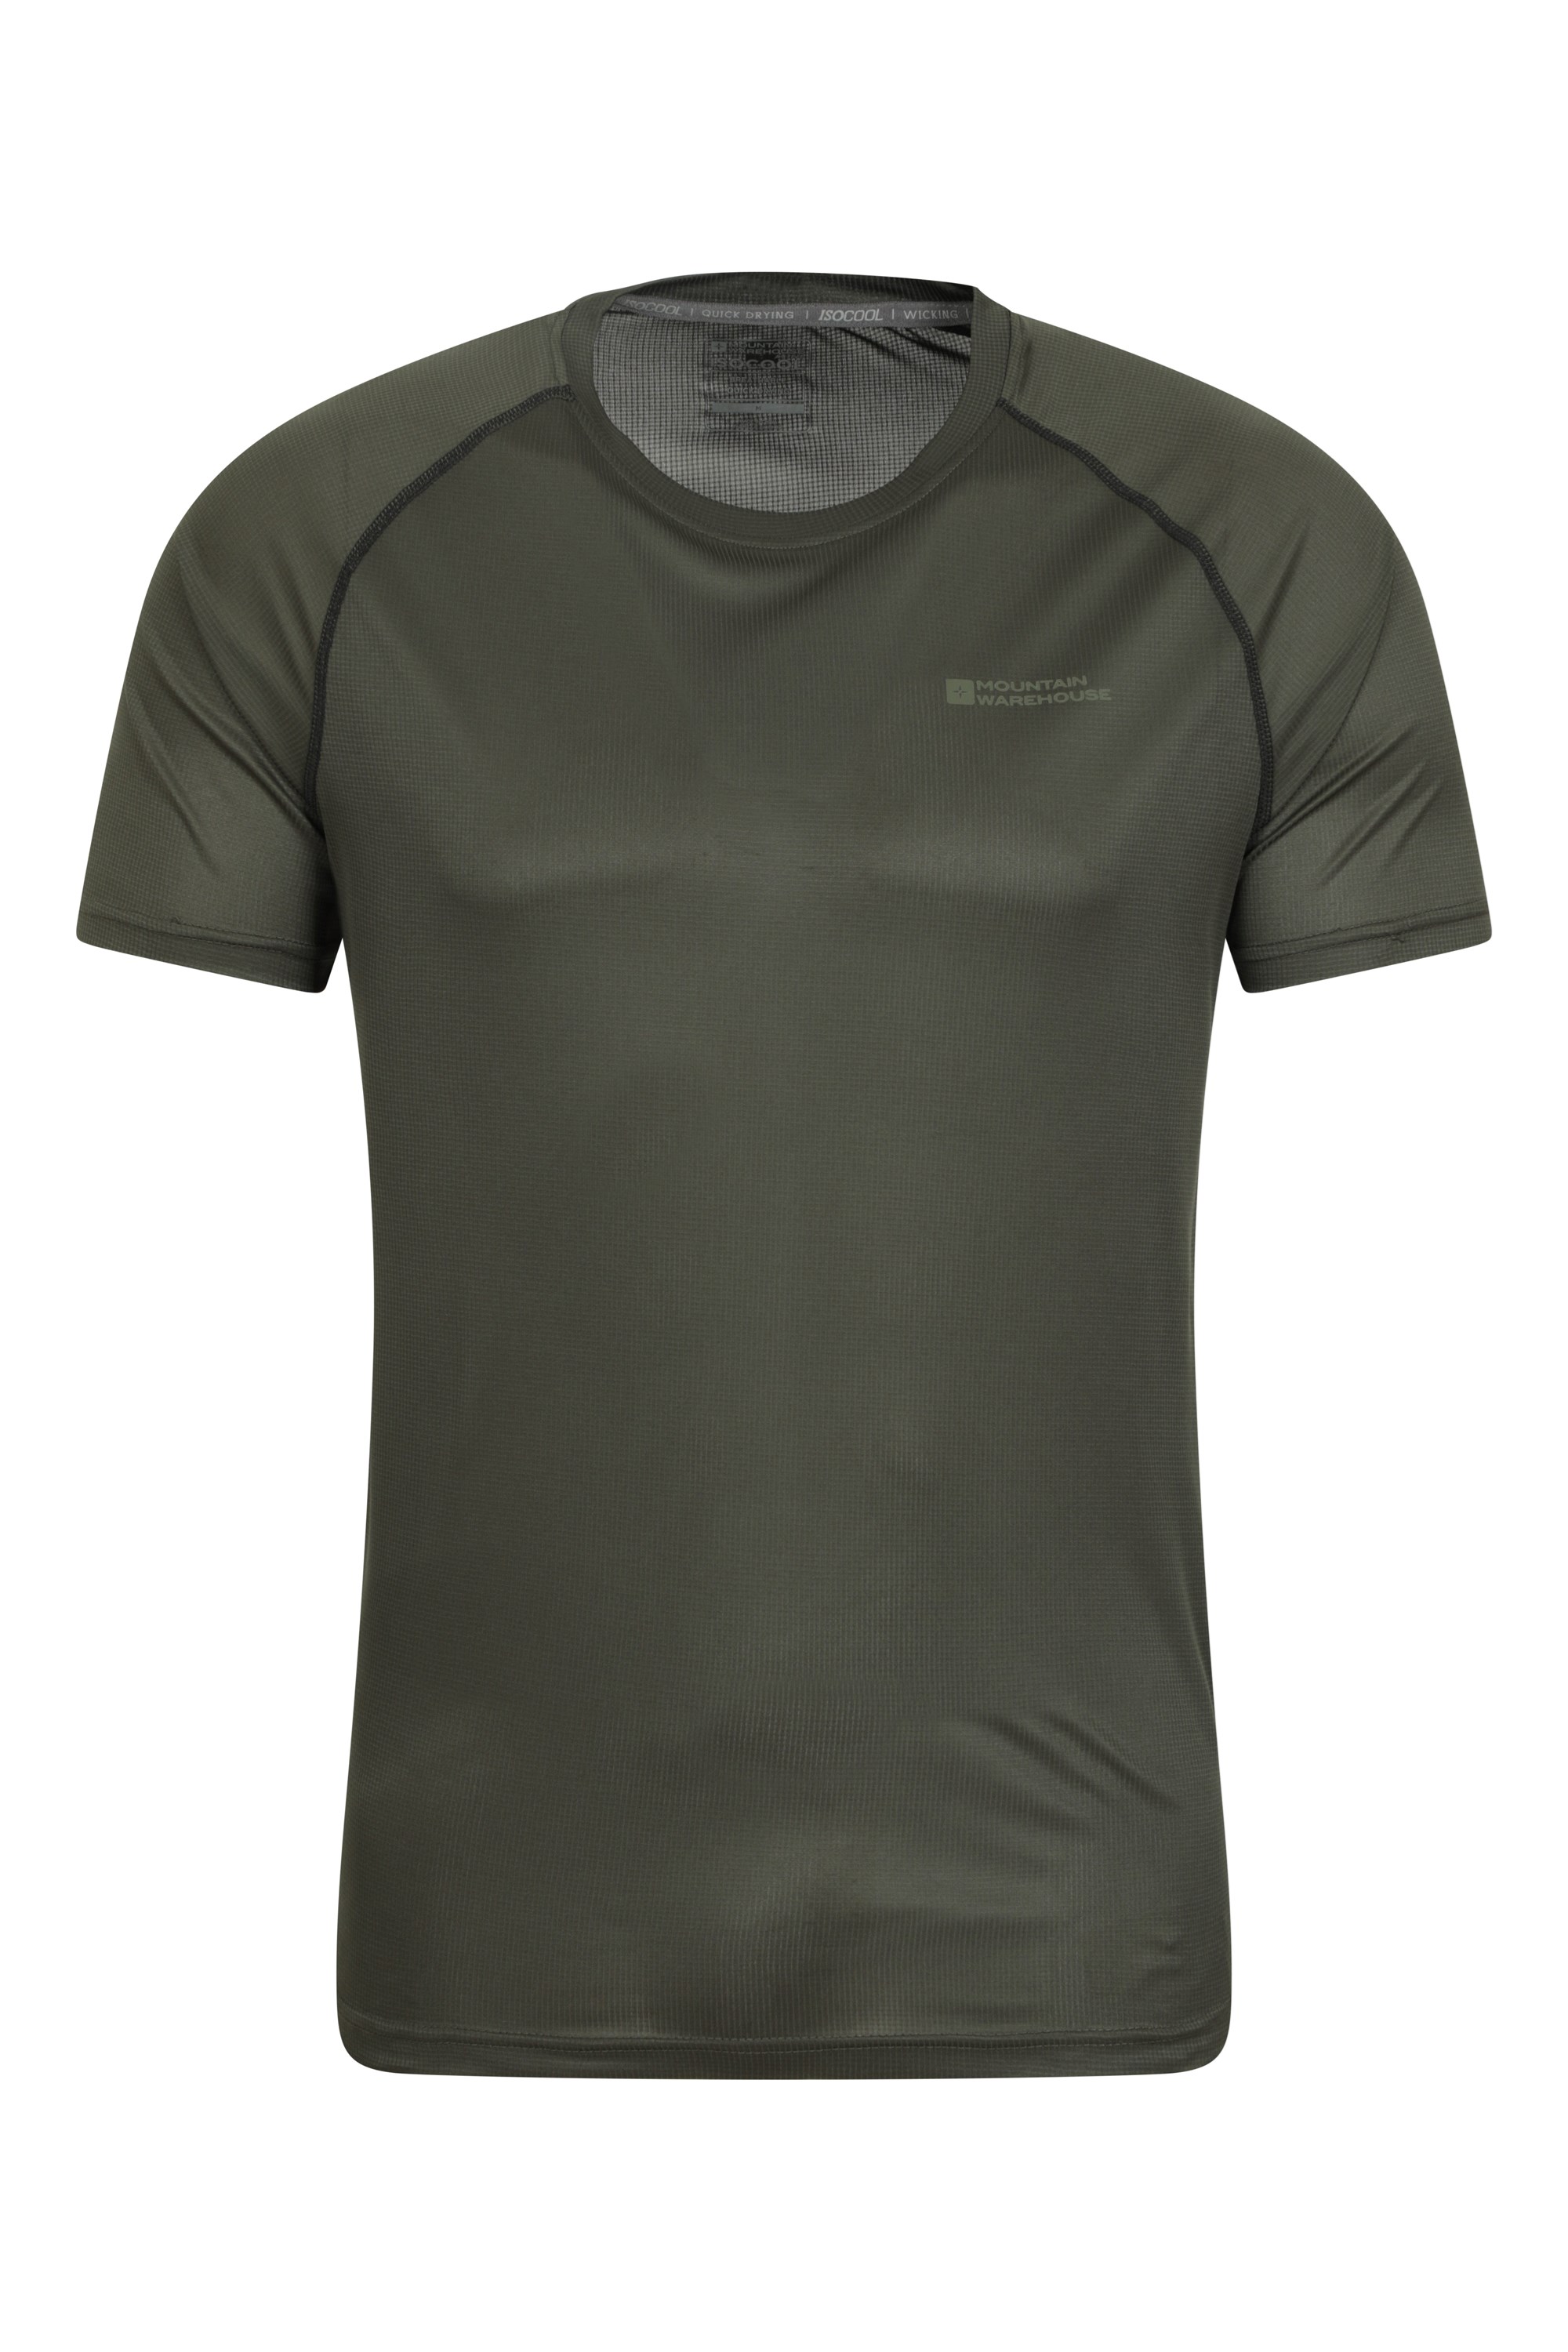 Lightweight Gym Tshirt Mountain Warehouse Aero Mens Short Sleeve Tee